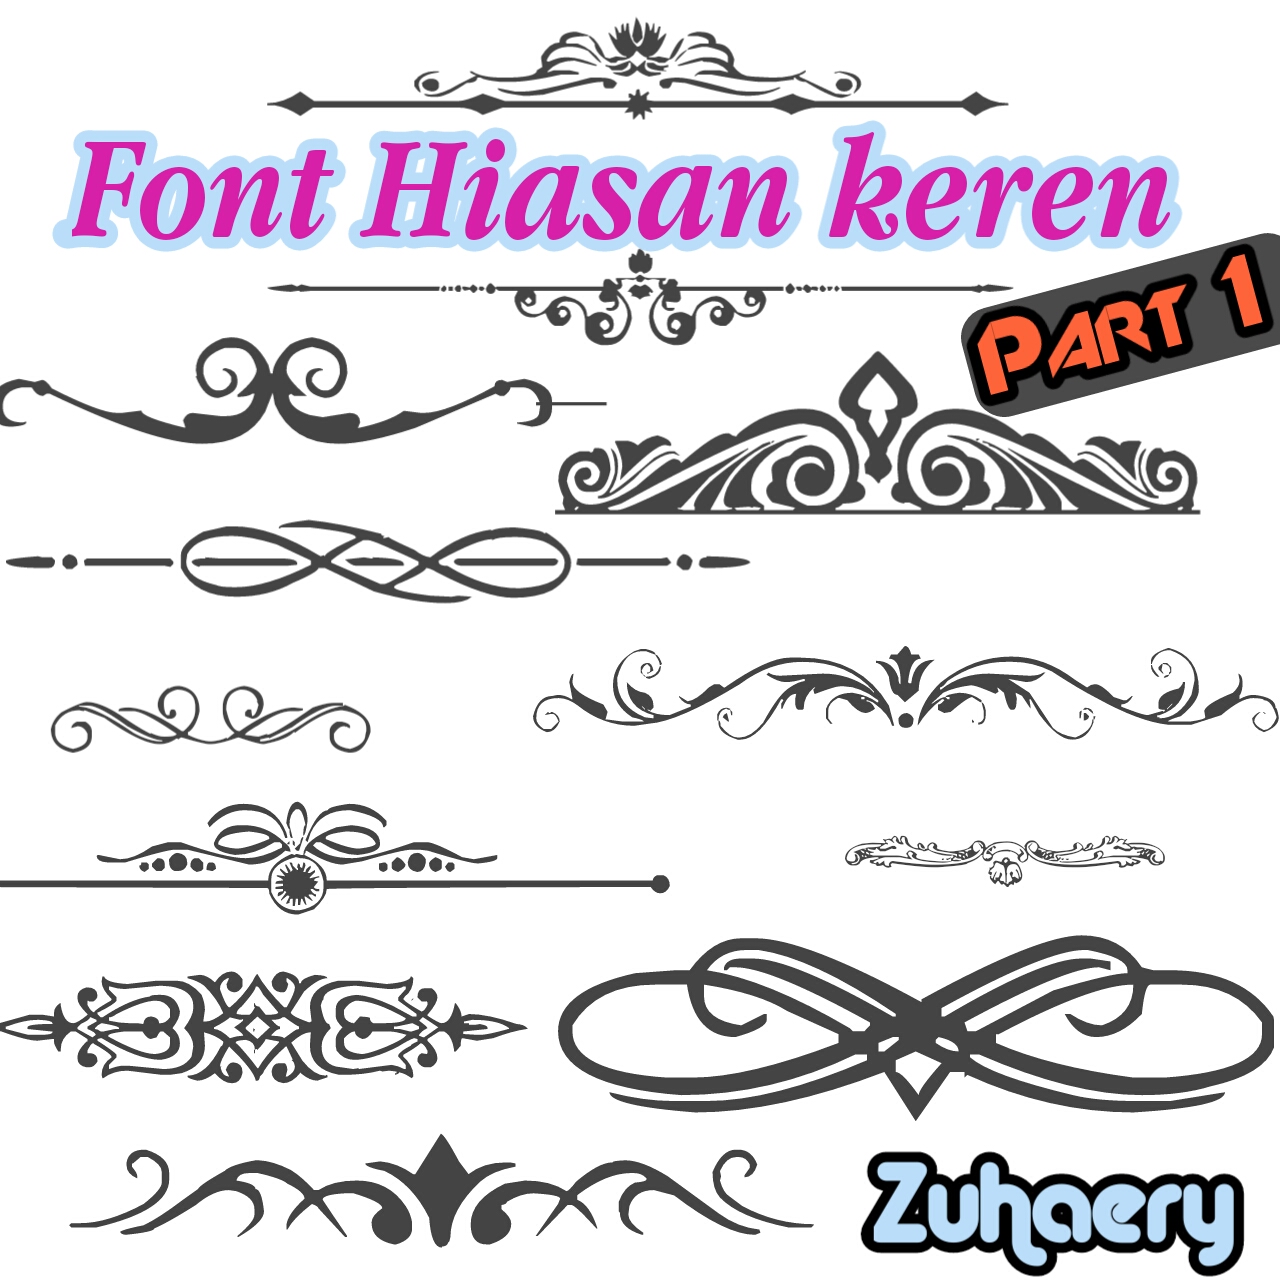 Download Font Hiasan Typography Keren Part 1 Picsay Pro Dan Pixellab